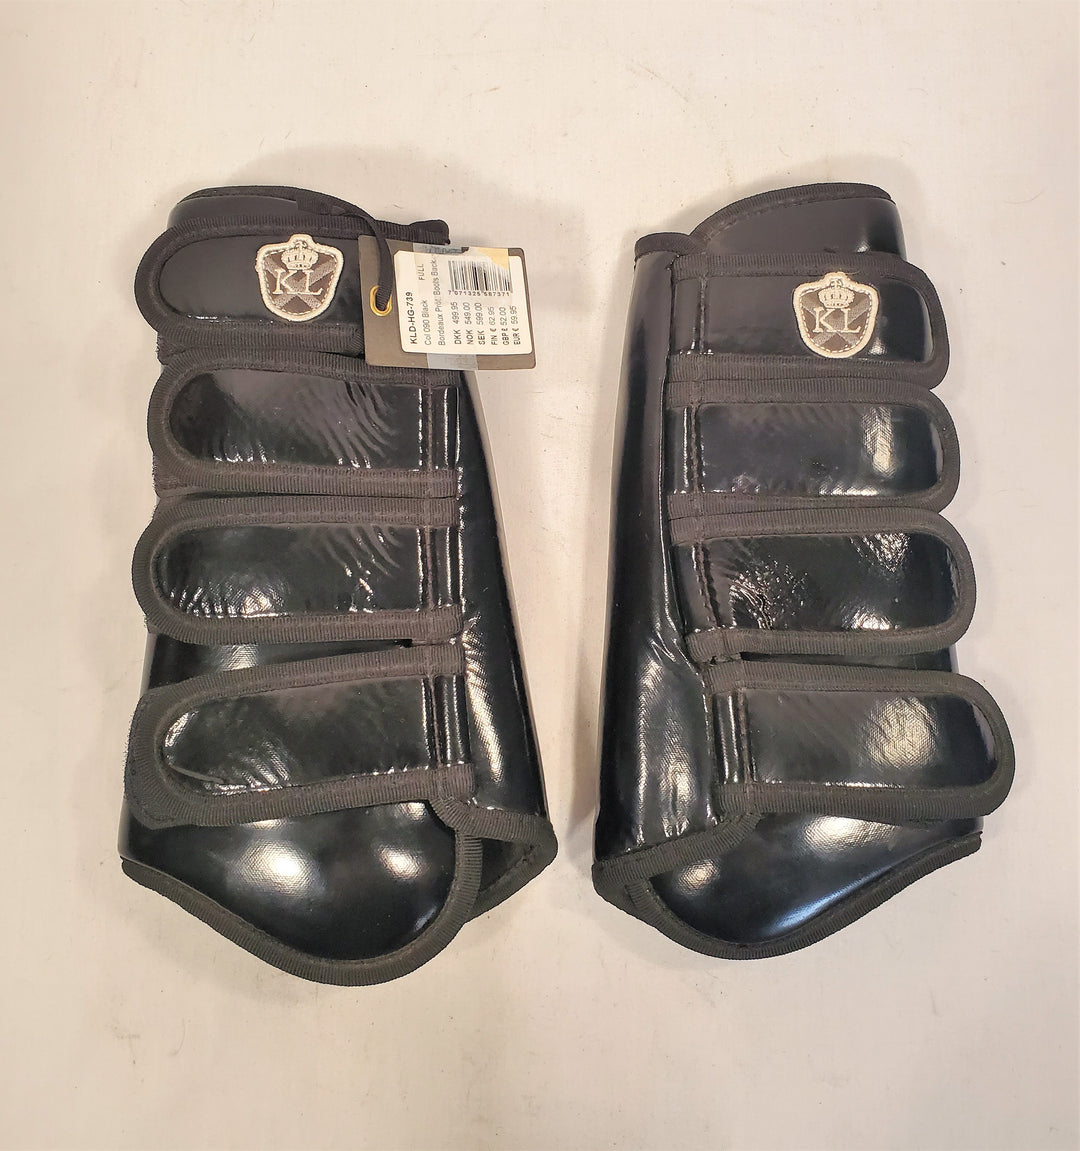 Kingsland Bordeaux Back Protection Boots - Full - New!